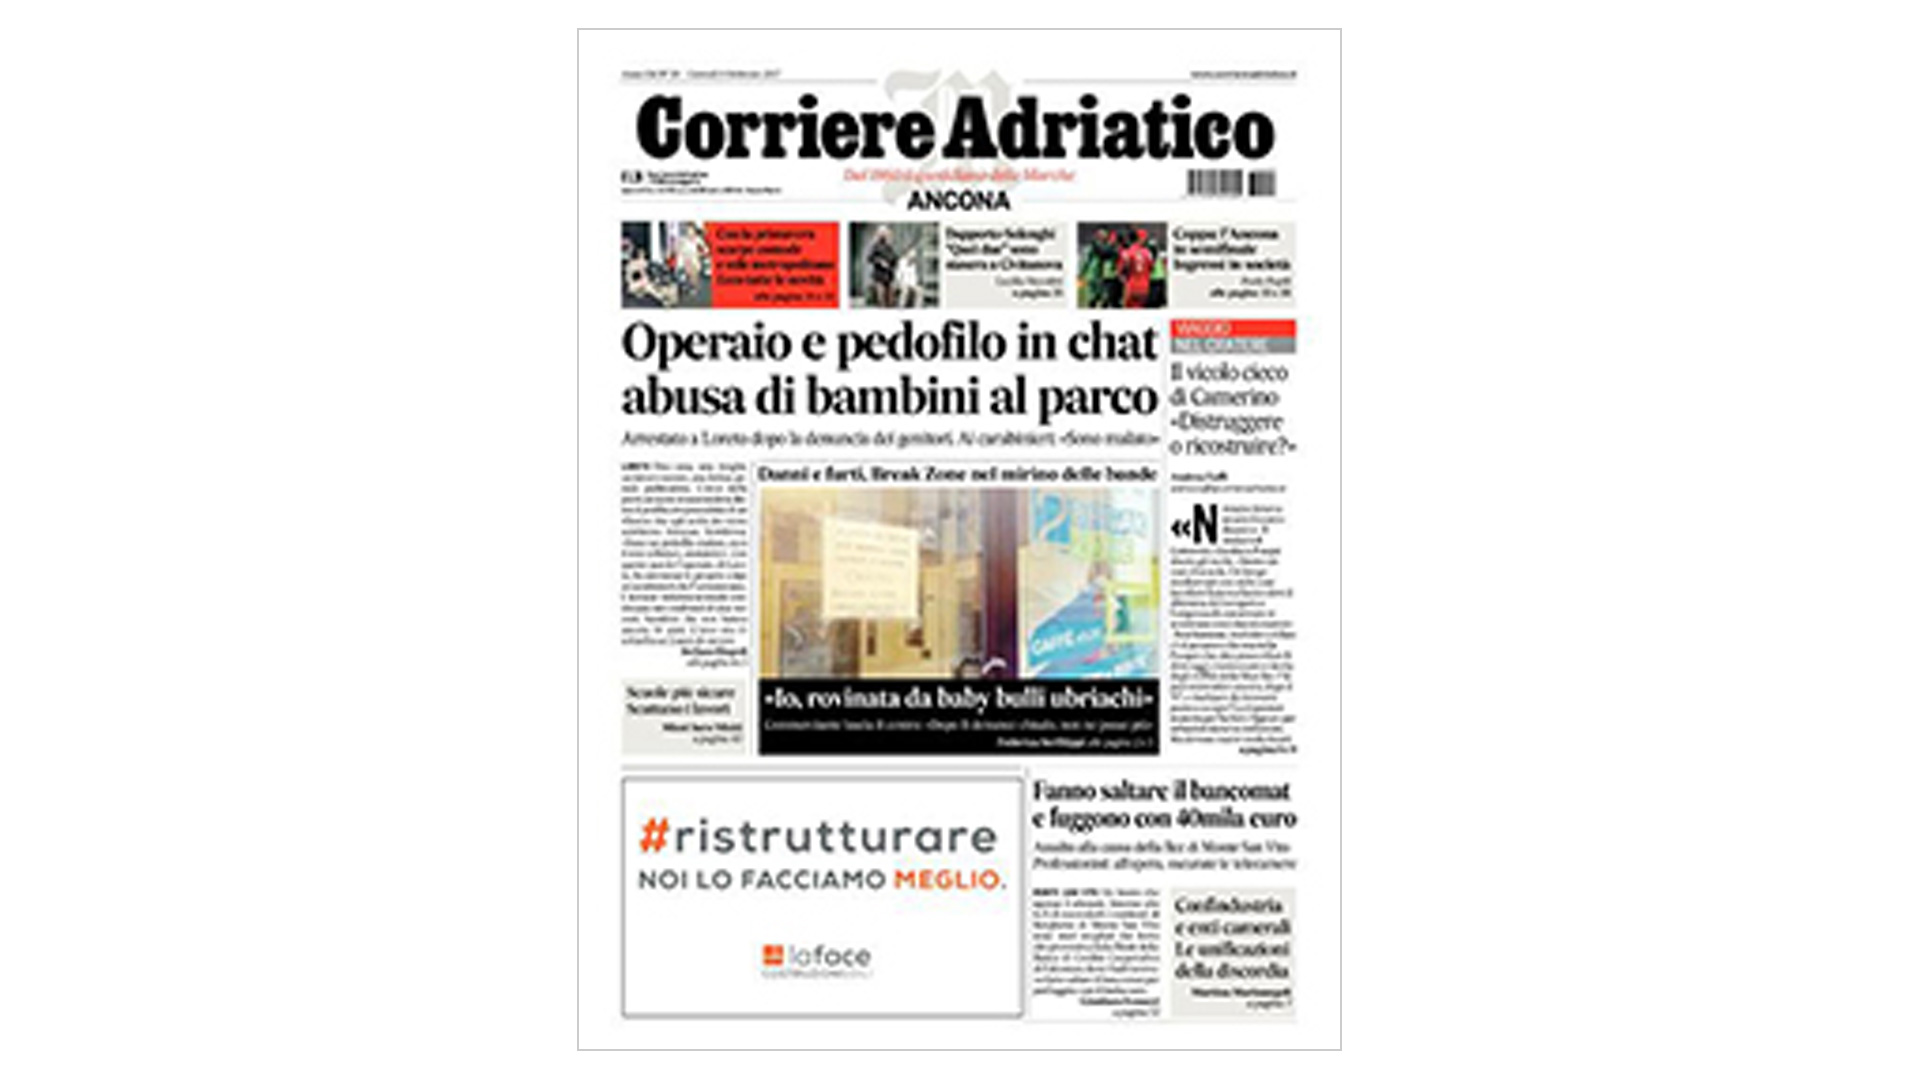 Corriere Adriatico - Febbraio 2017 - Giessegi.it